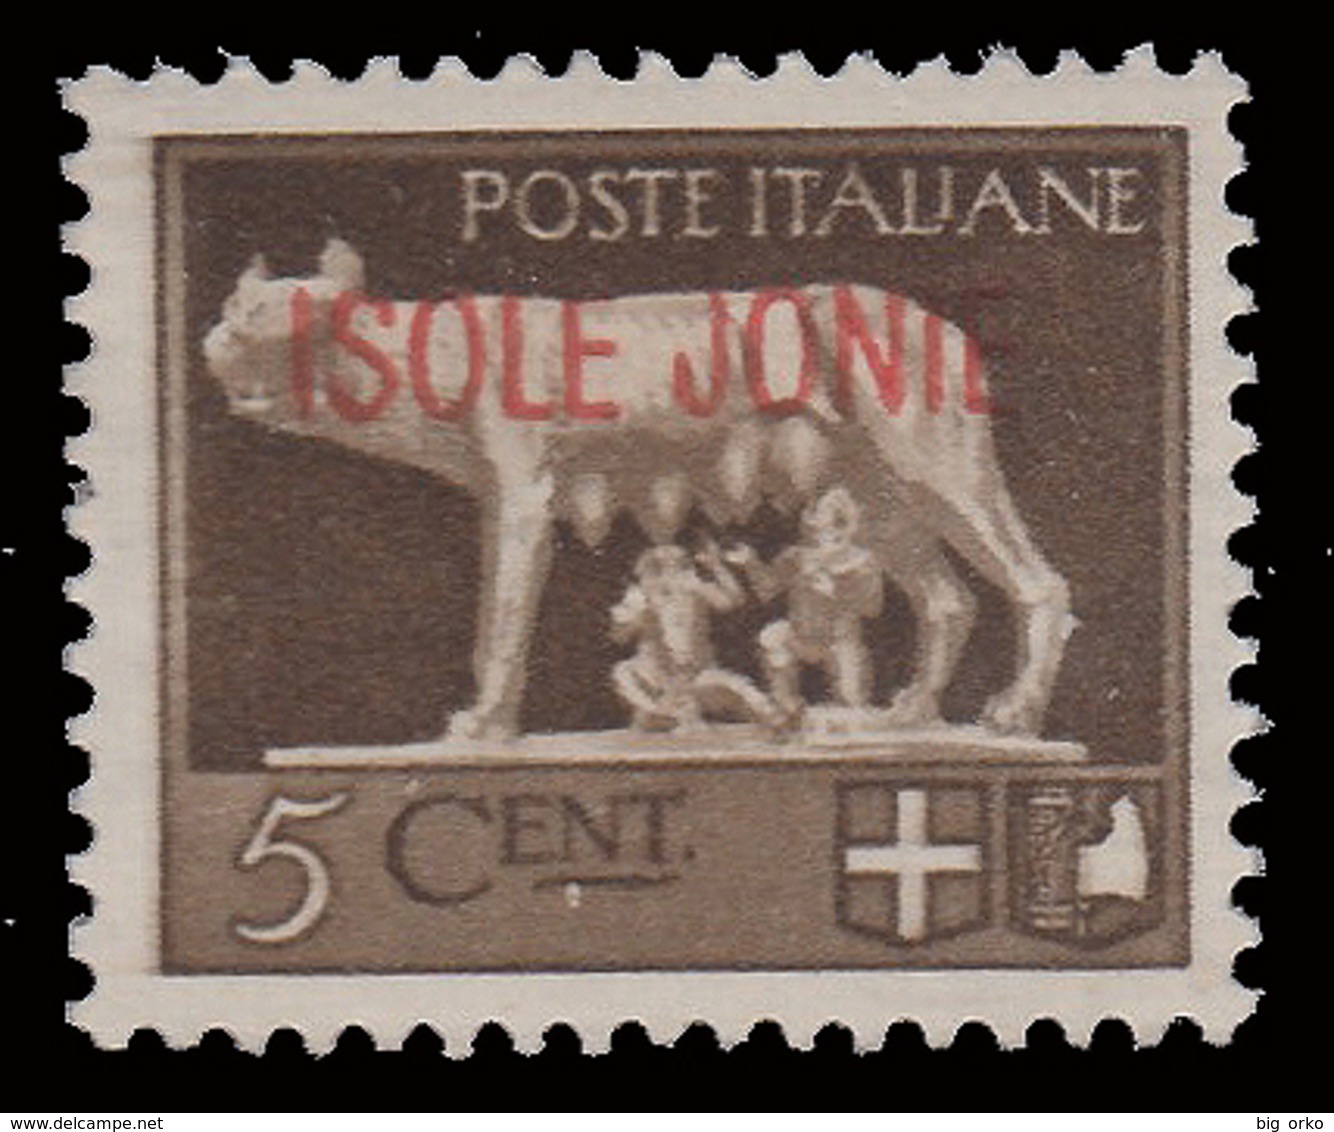 ITALIA - ISOLE JONIE (Emissioni Generali) - 5 C. Bruno - 1941 - Ionian Islands